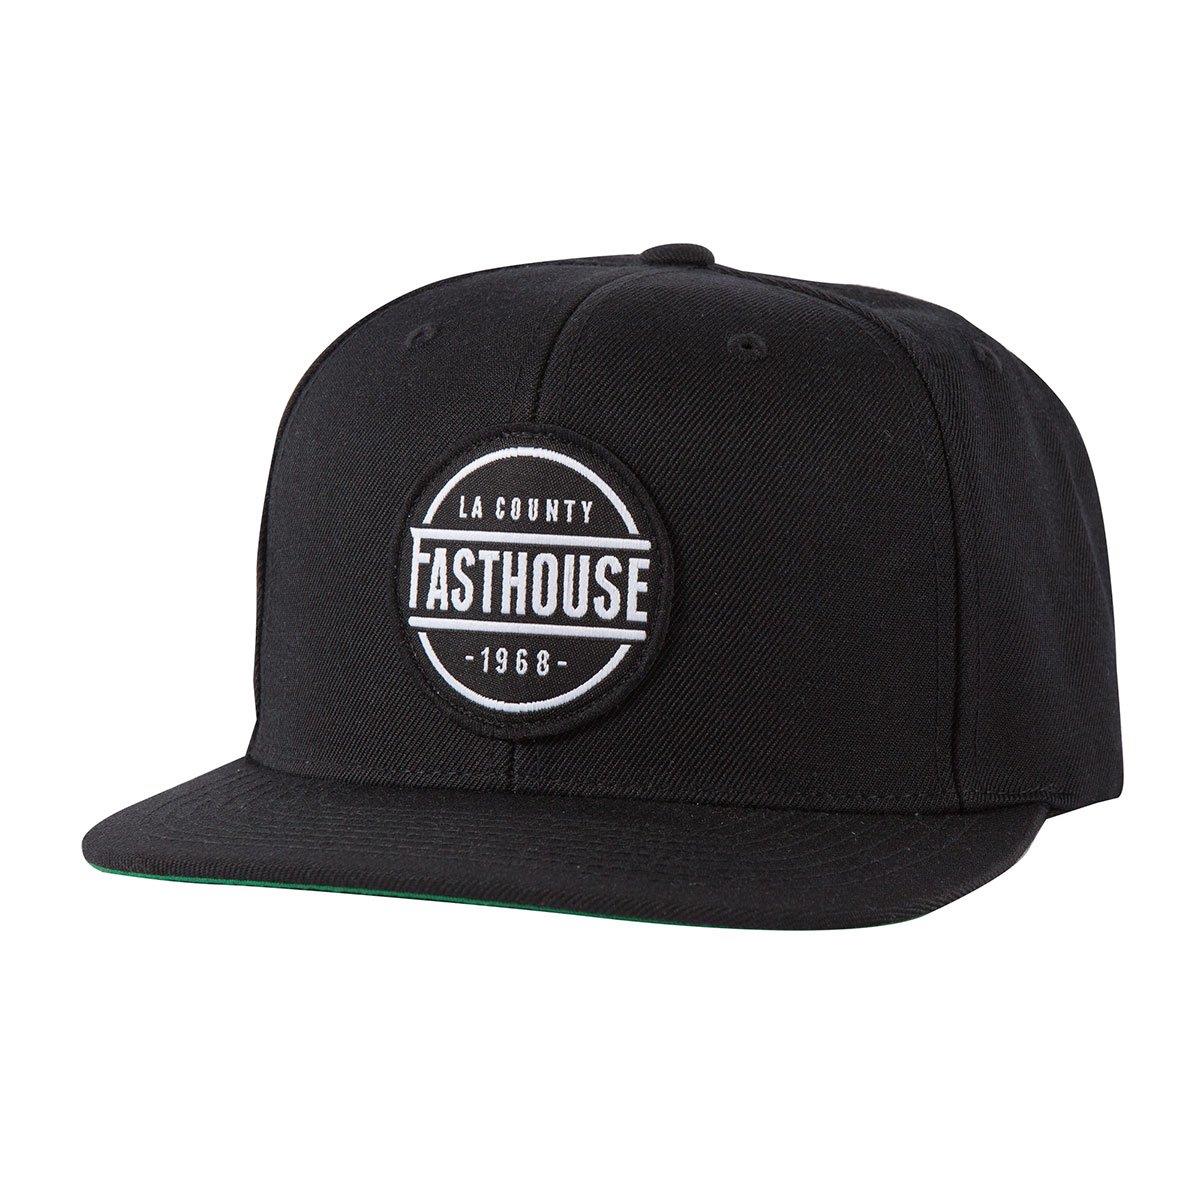 Fasthouse Snapback Cap LA County Black